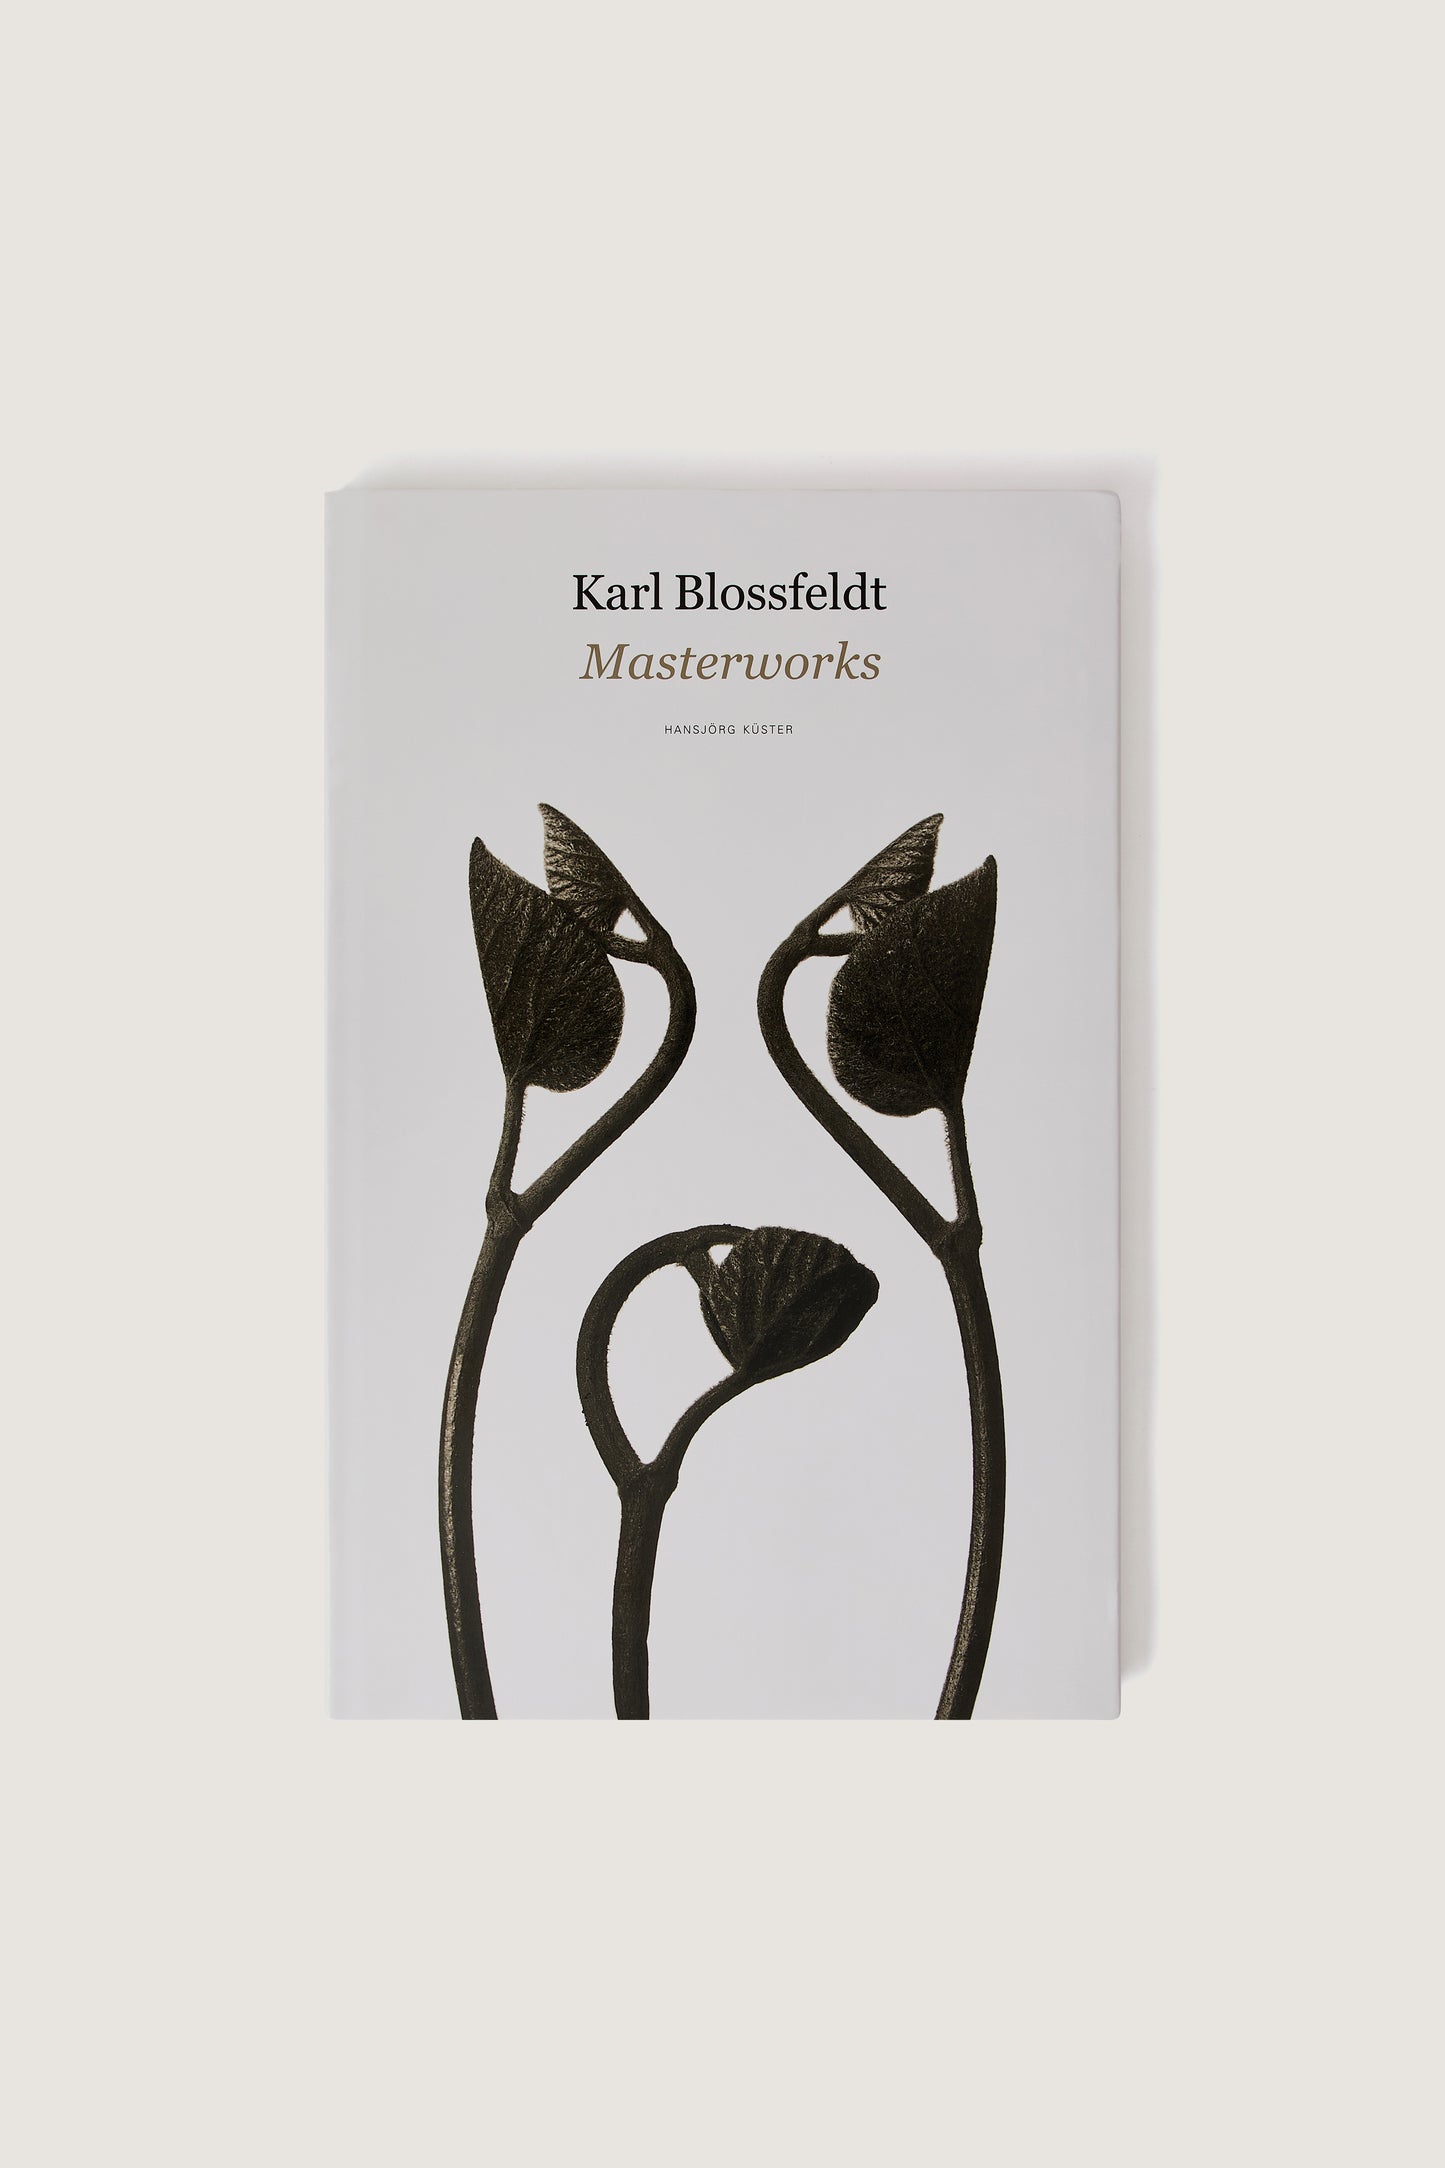 BOOK "KARL BLOSSFELDT : MASTERWORKS"